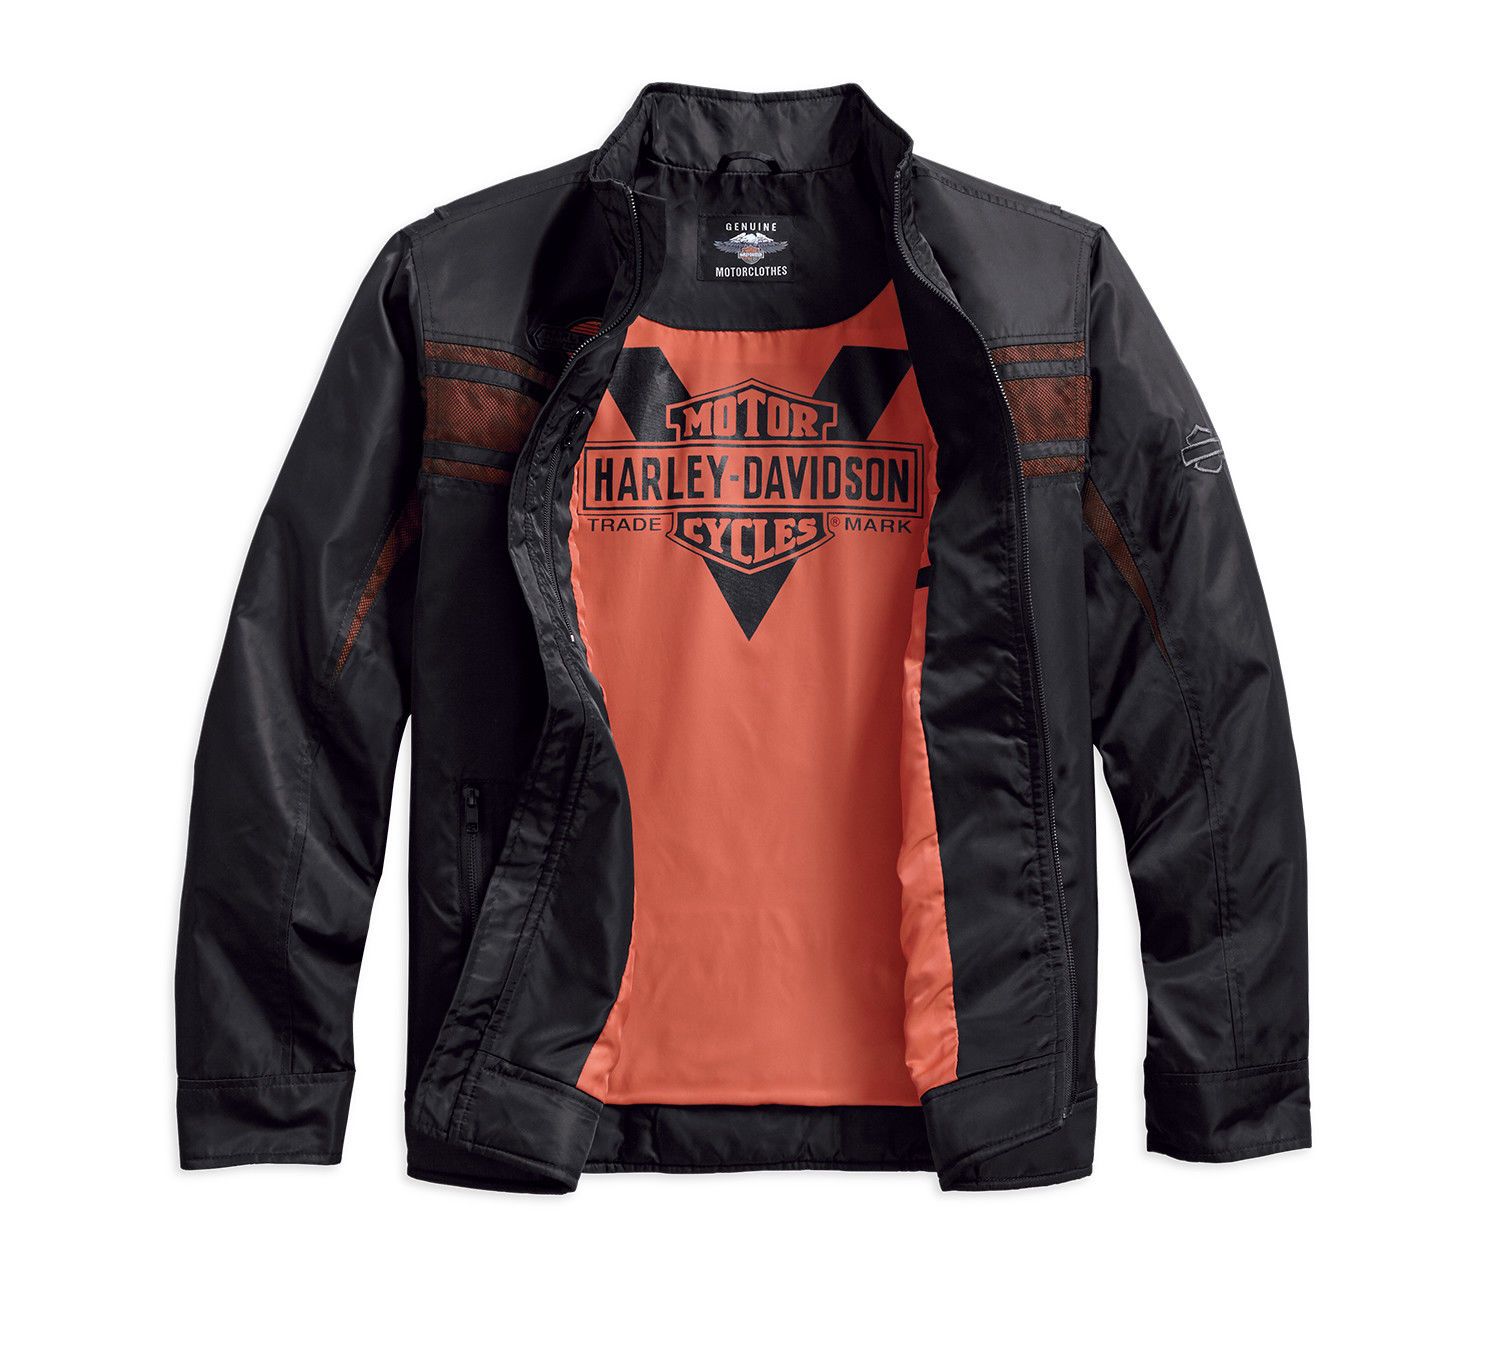 Harley-Davidson Men's Lightweight Mesh Accent Nylon Jacket, Black 97454-18VM